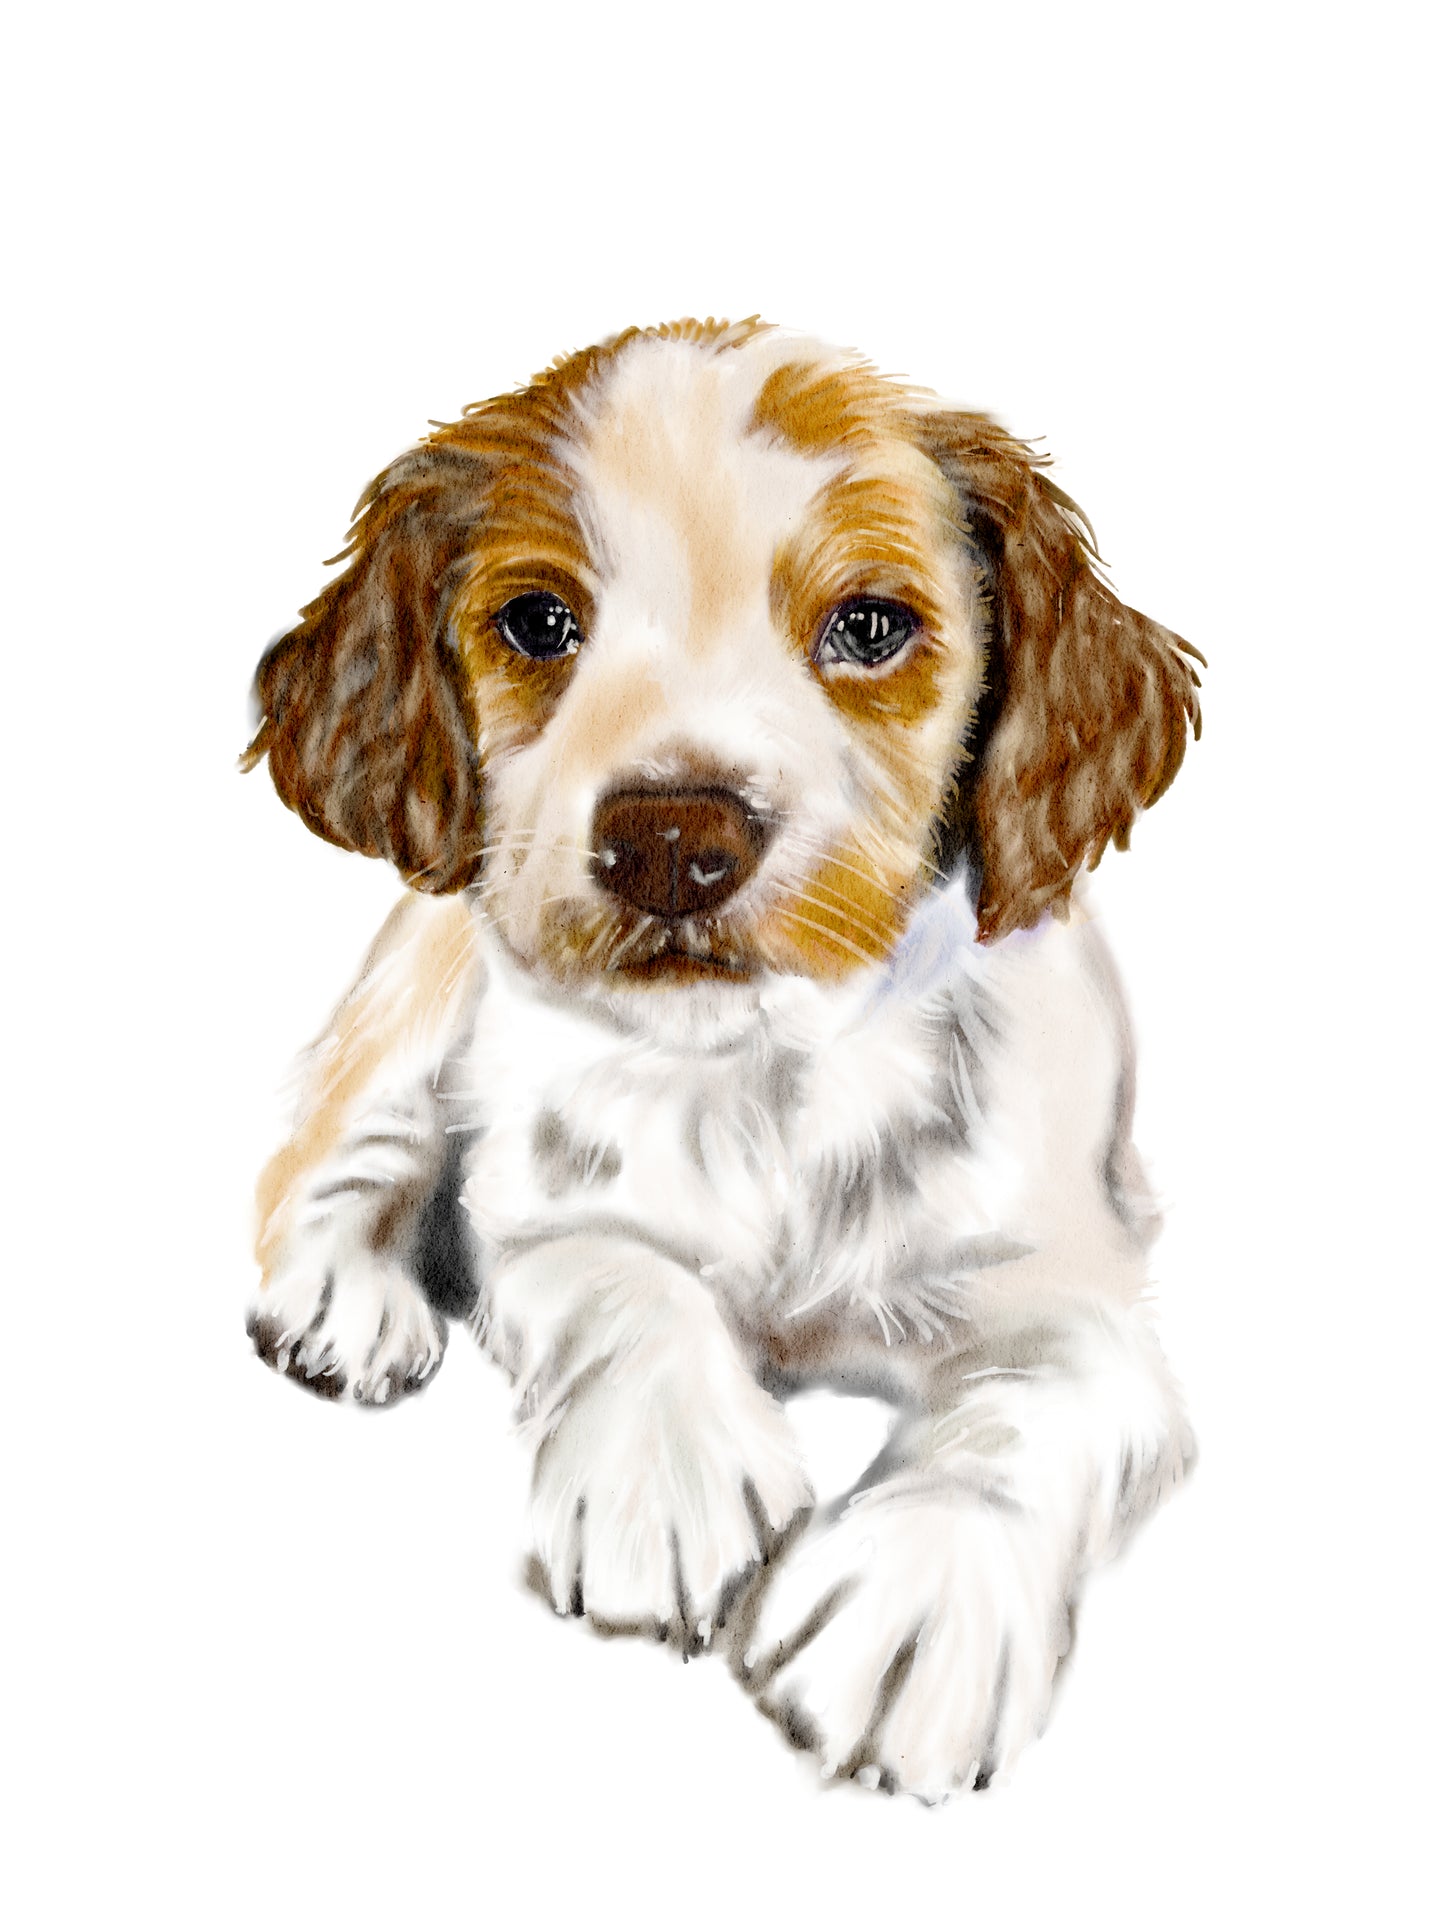 Custom procreate dog painting, Dog painting from photo, Pet portrait, Dog portrait, cat painting - The Wedding Crest Lab